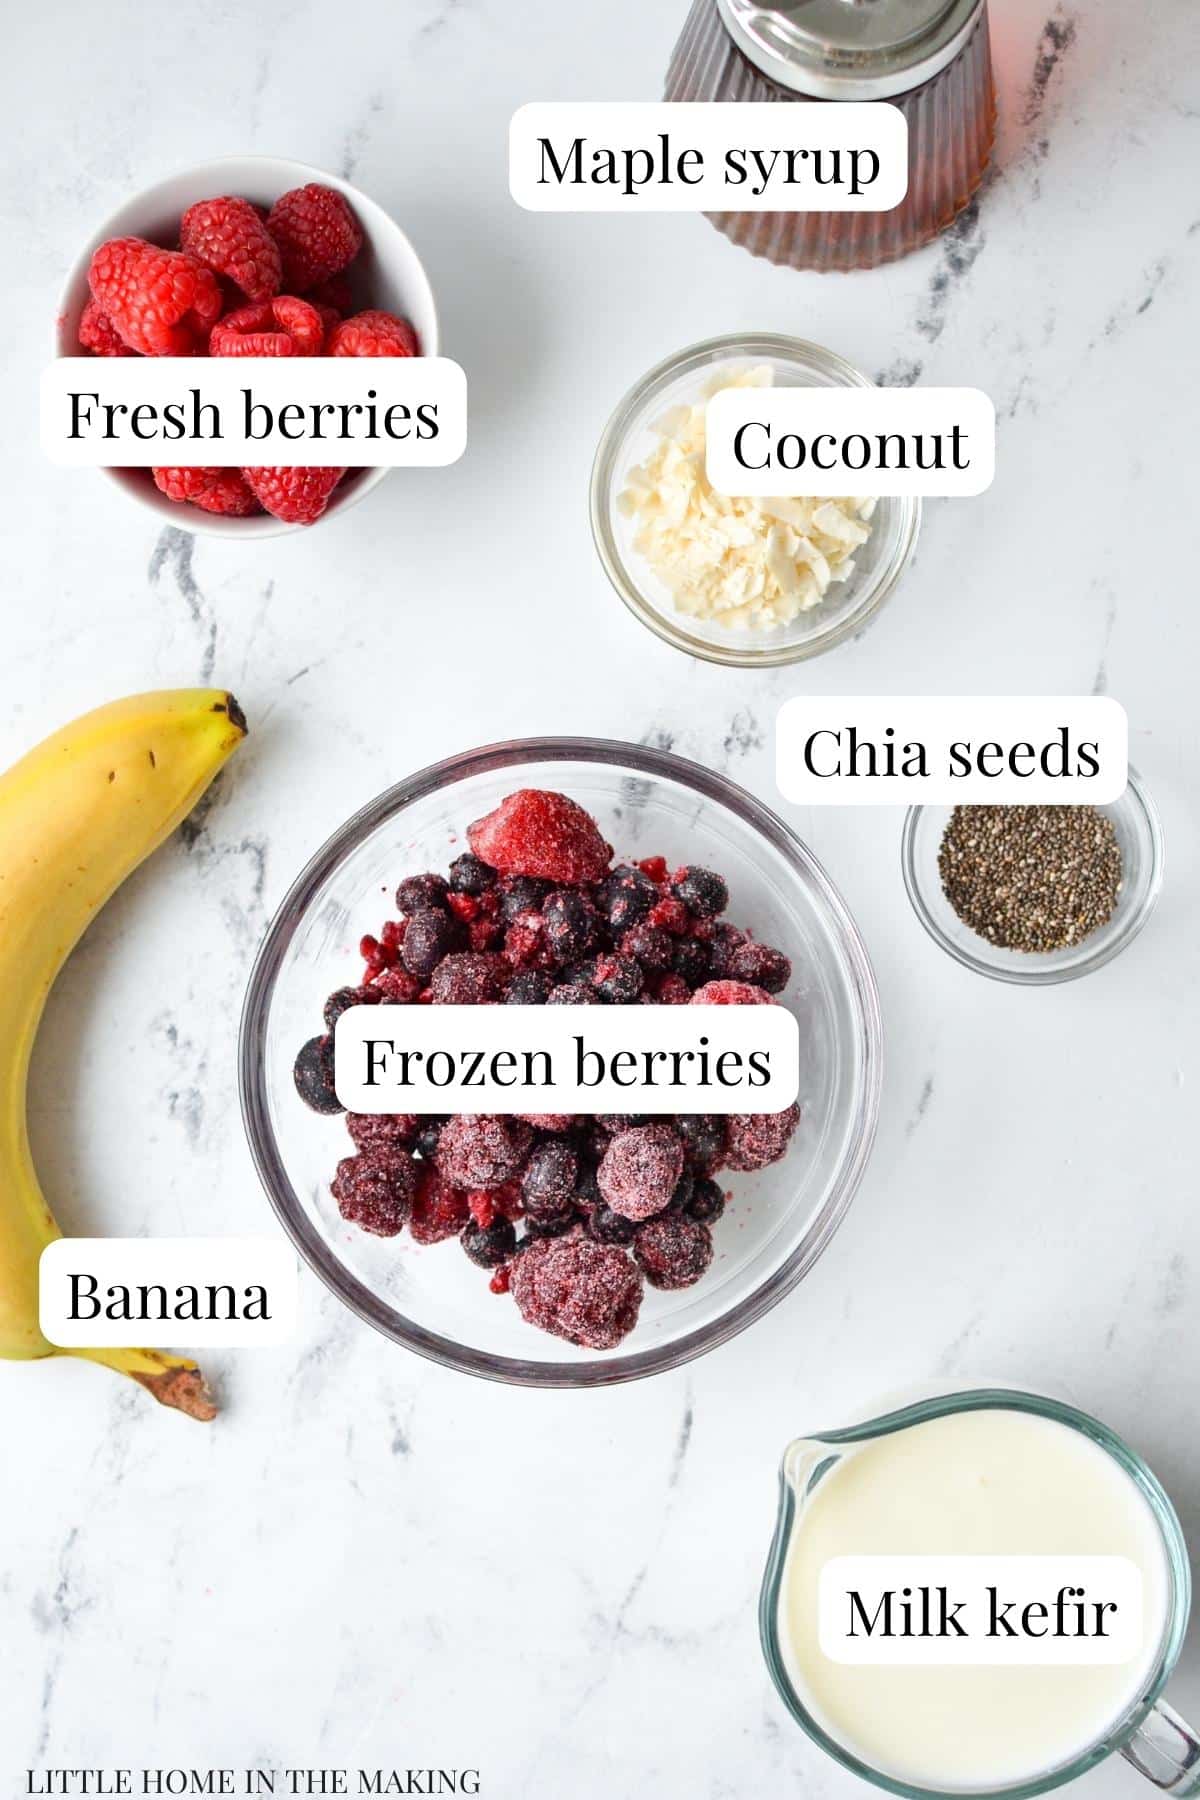 The ingredients needed to make a smoothie bowl: frozen fruit, kefir, chia, bananas, etc.